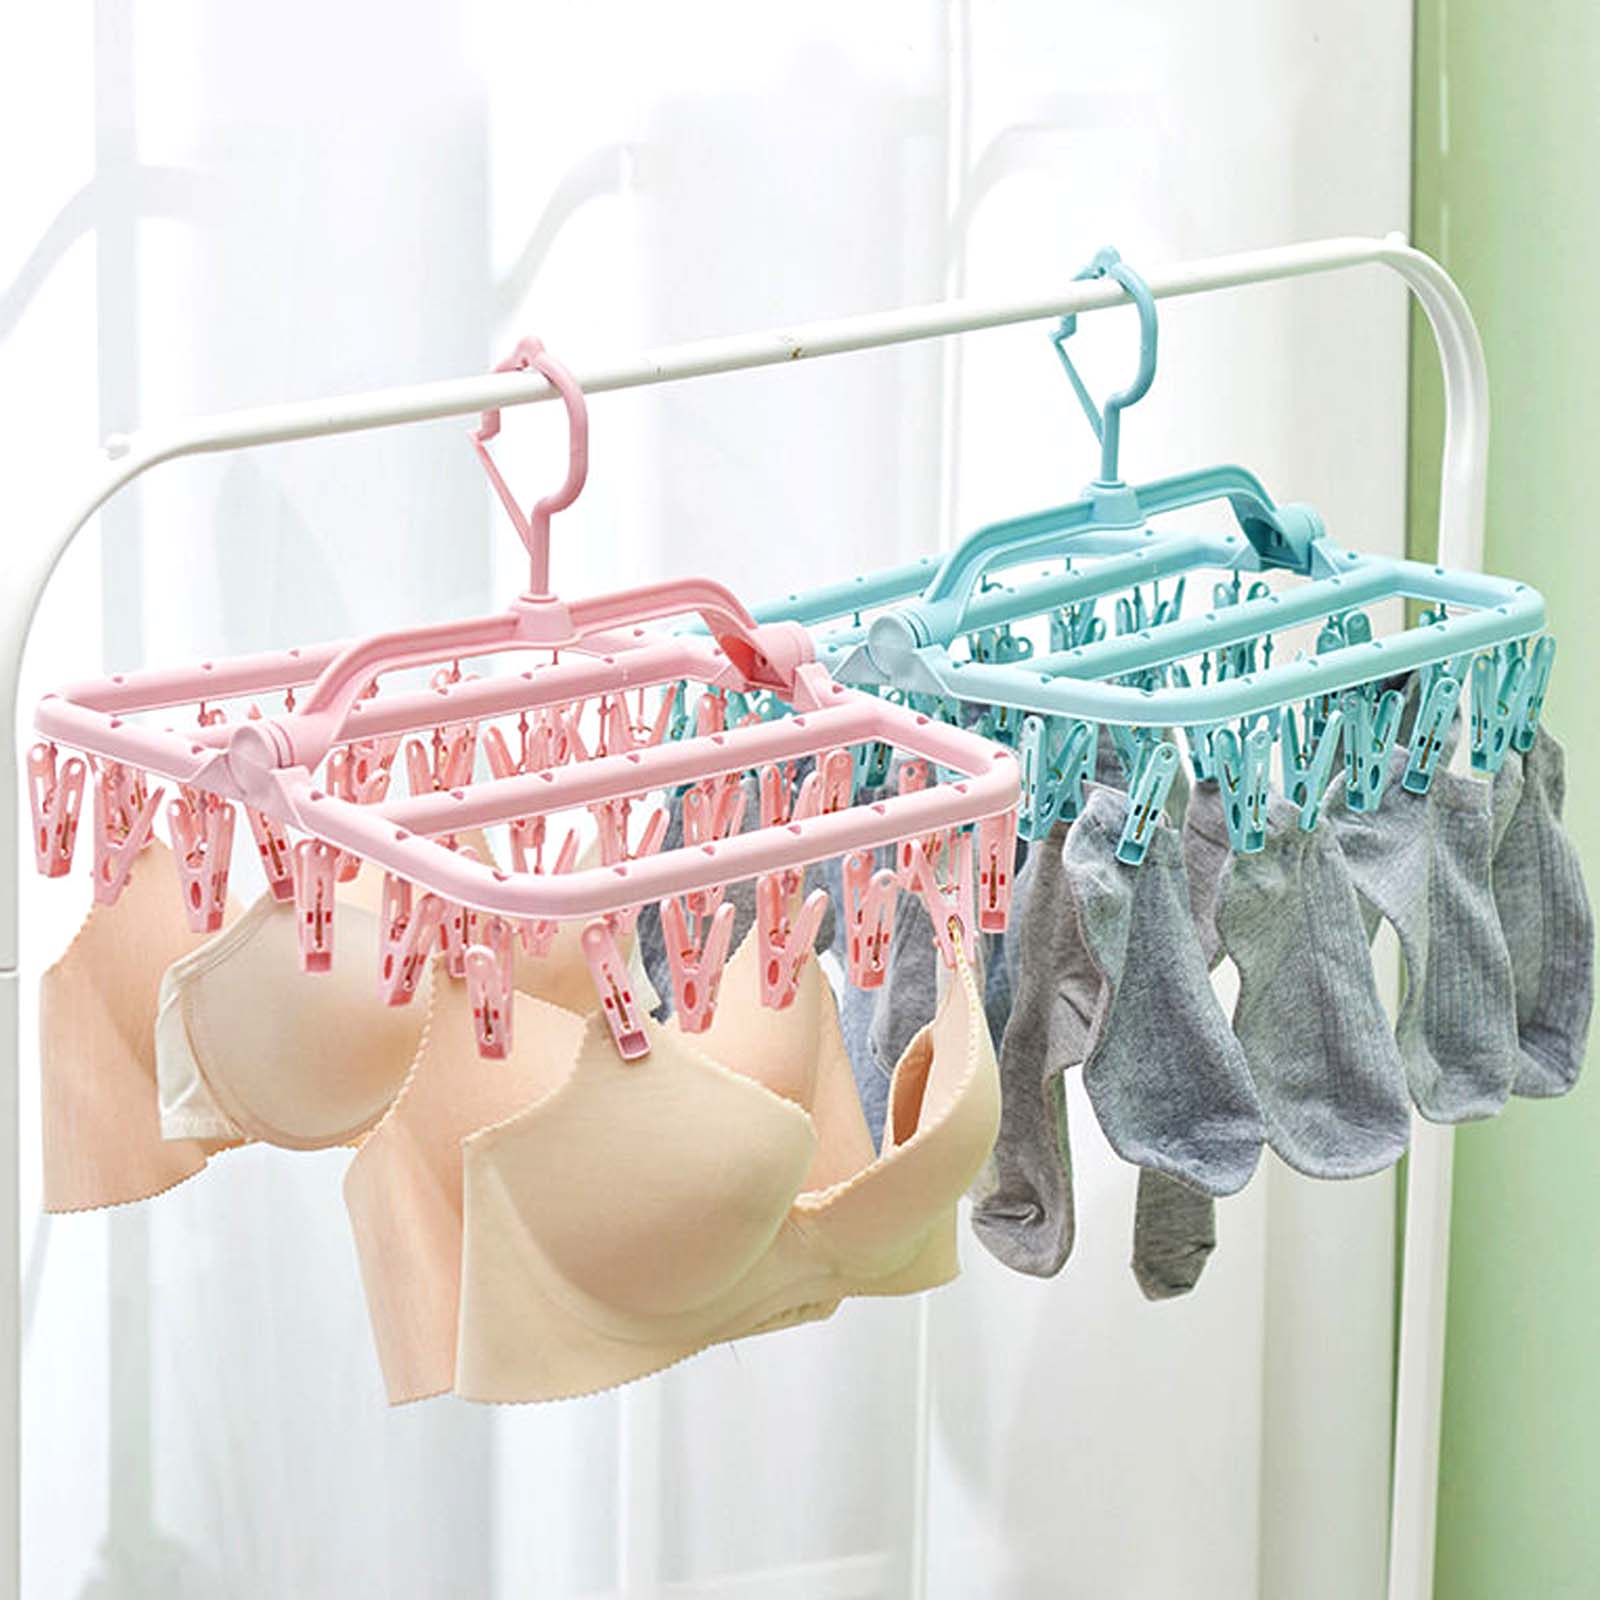 rUrEu Perchas de plástico para secar ropa, con múltiples clips, para colgar  en la pared, plegable, balcón, baño, secado, ropa interior, calcetines